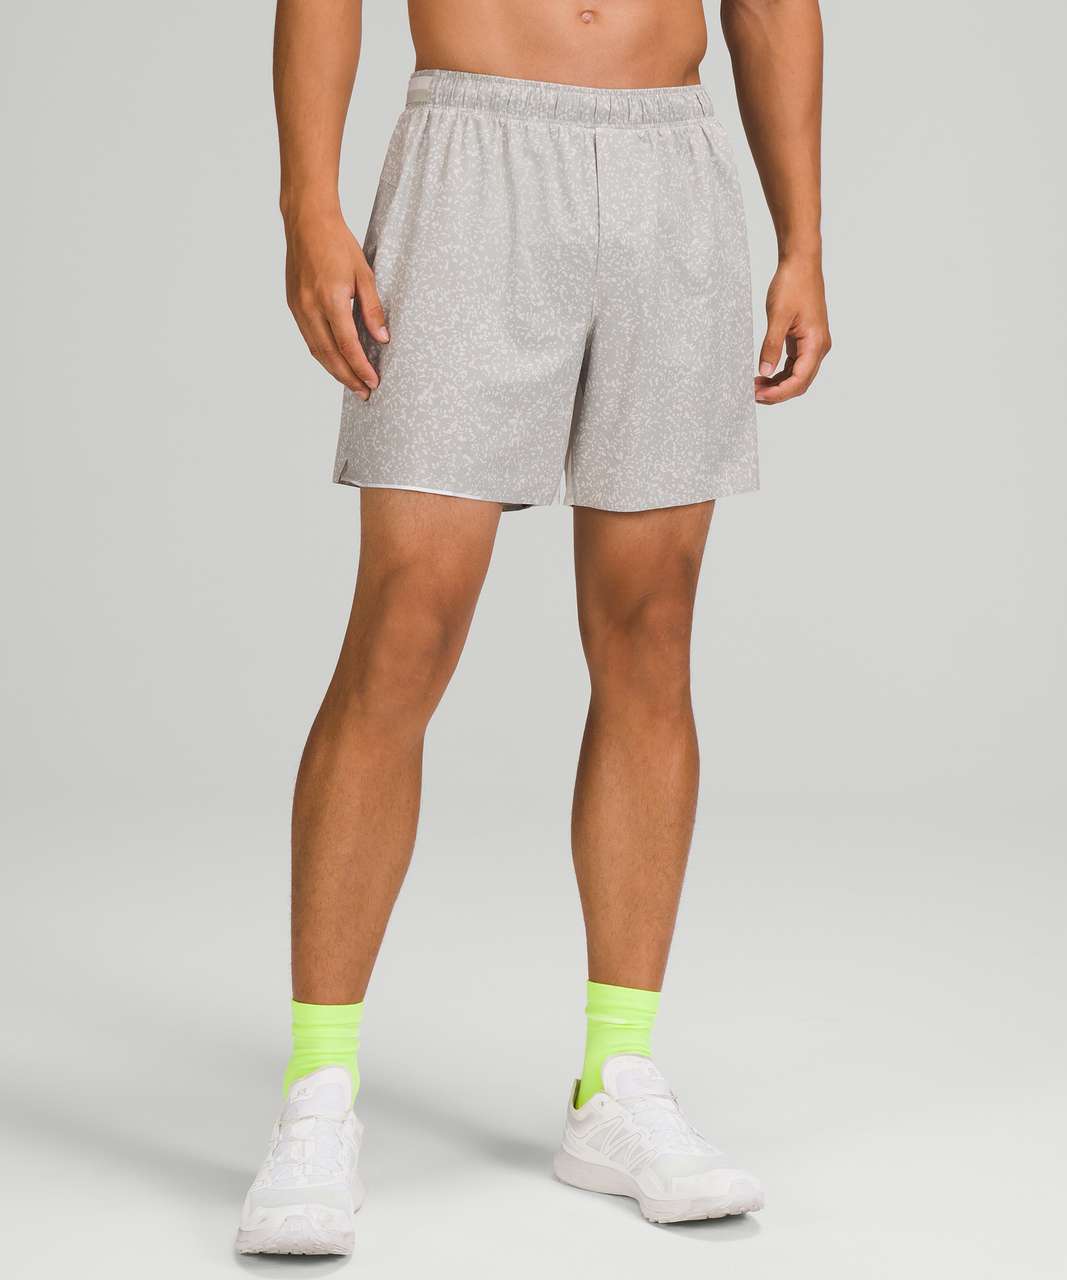 Lululemon Surge Bold Lines Shorts - Athletic apparel